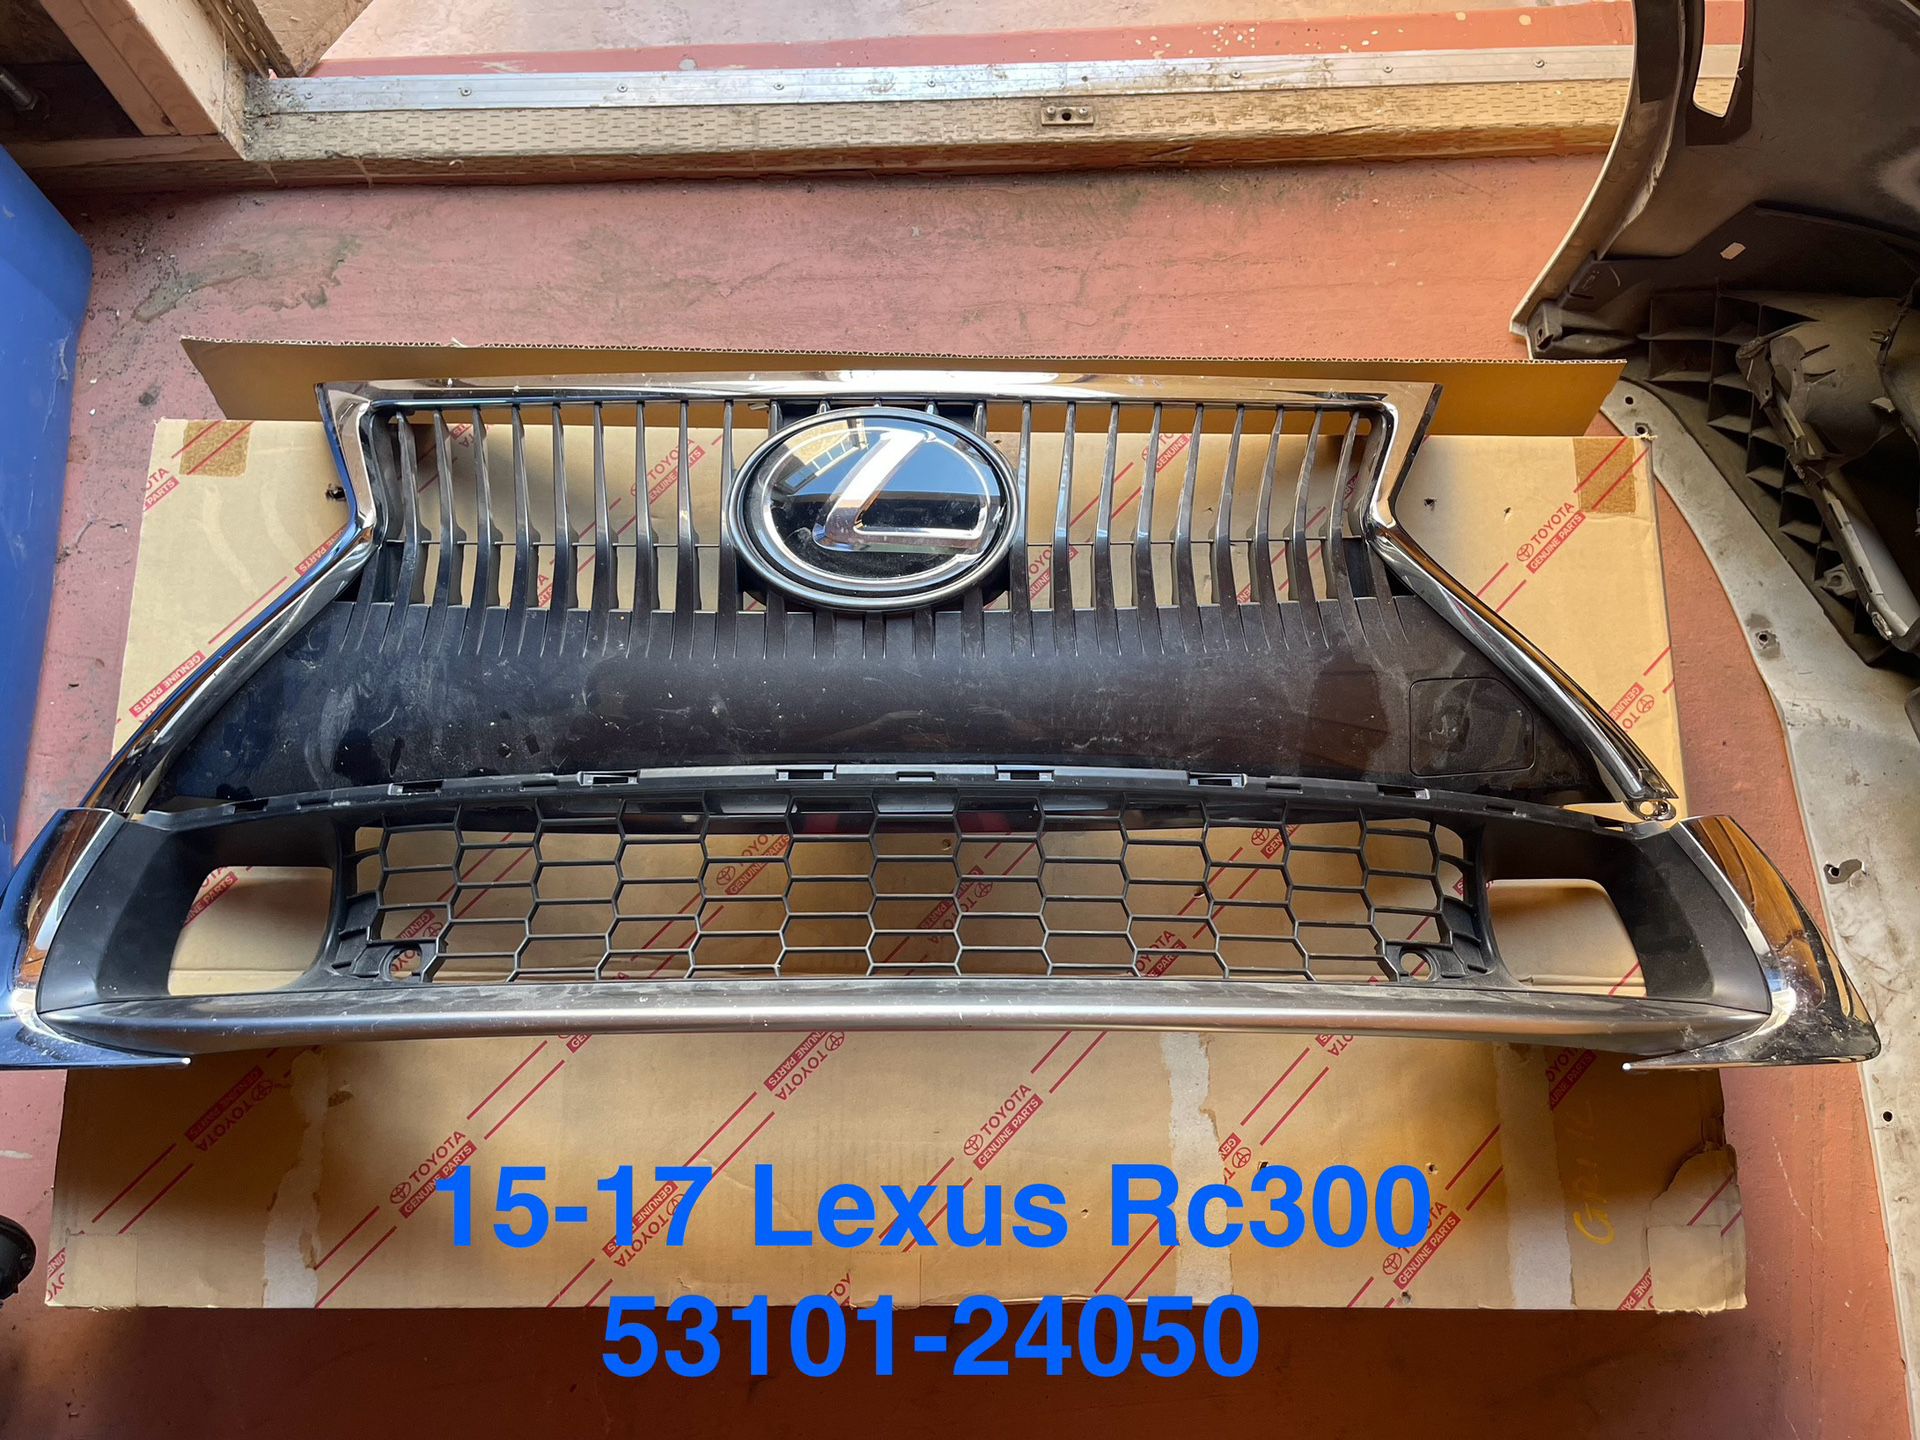 15-17 Lexus Rc300 Oem Used Grille W/emblem